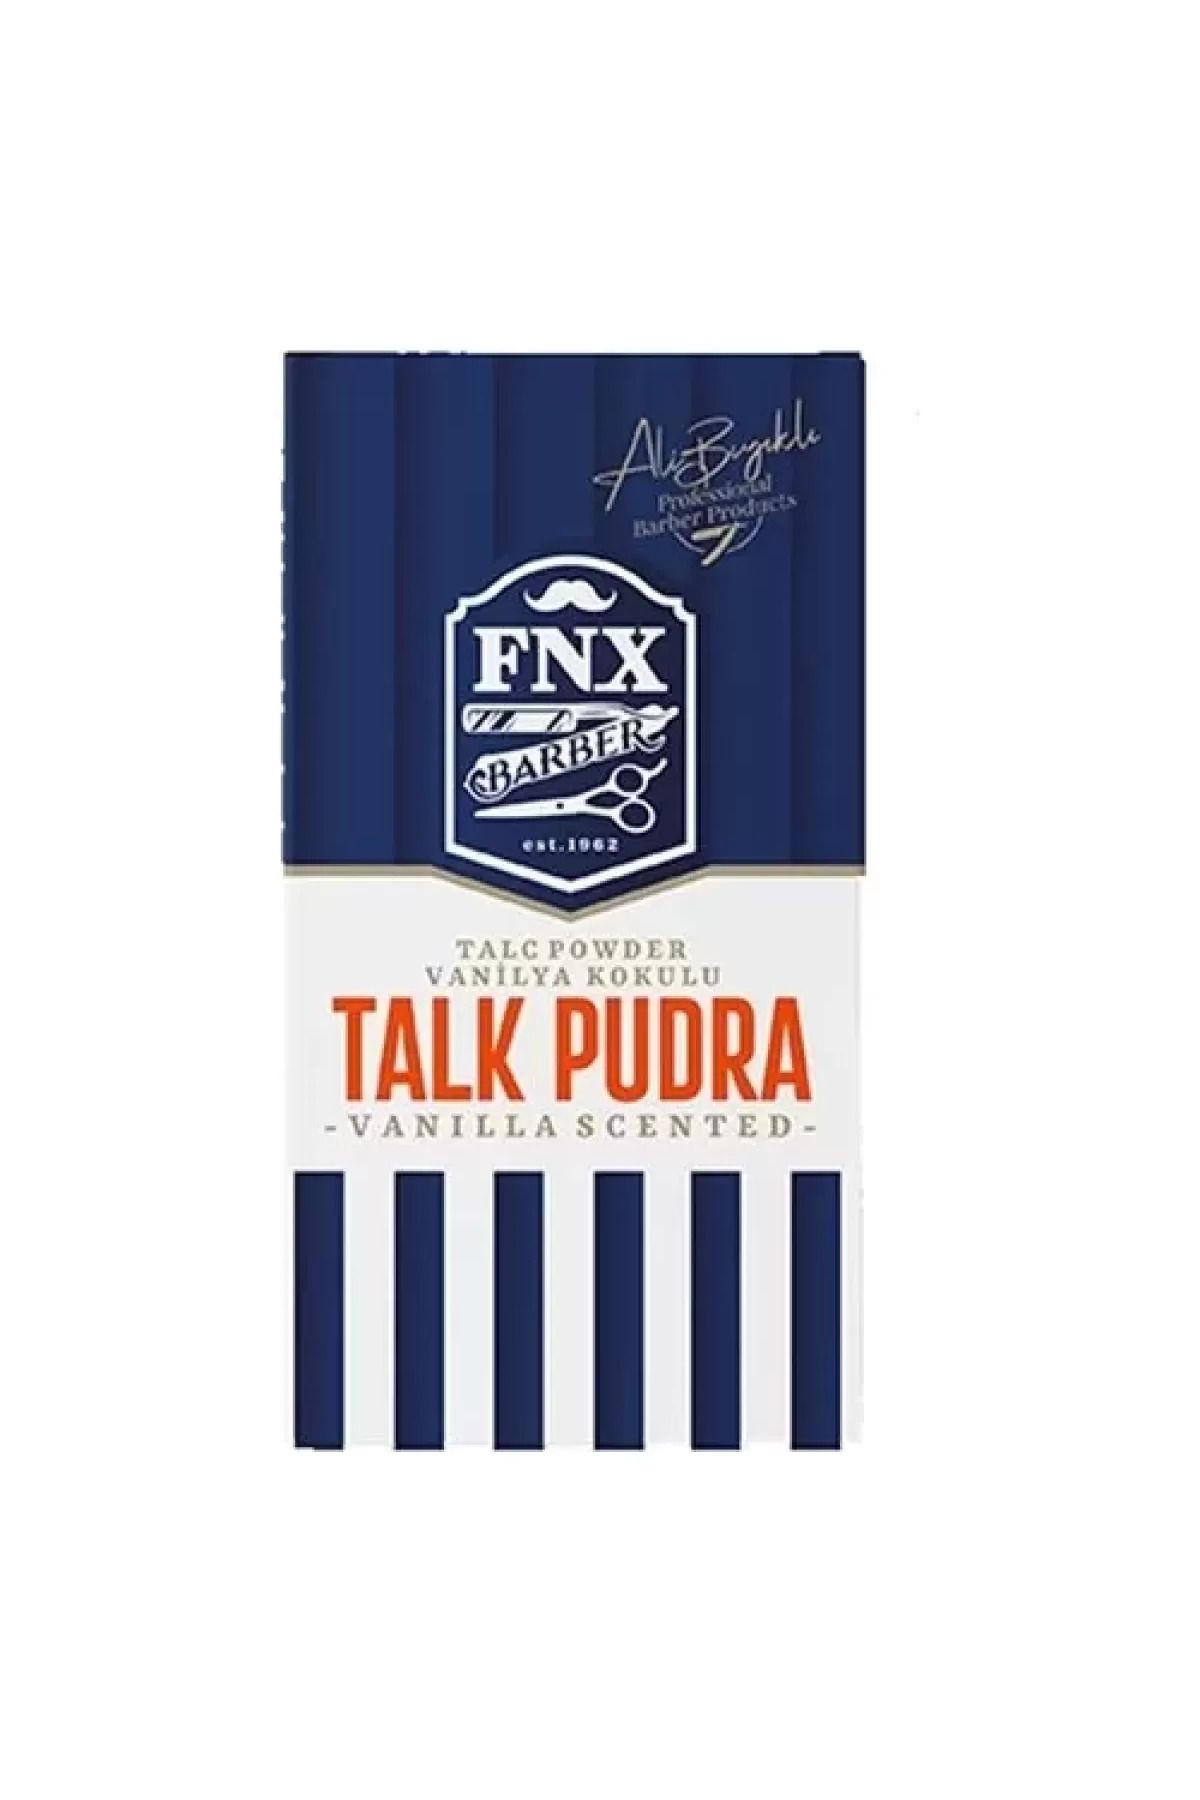 Fonex Fnx Barber Vanilya Kokulu Talk Pudra 250 GR x 4 Adet (Findit)